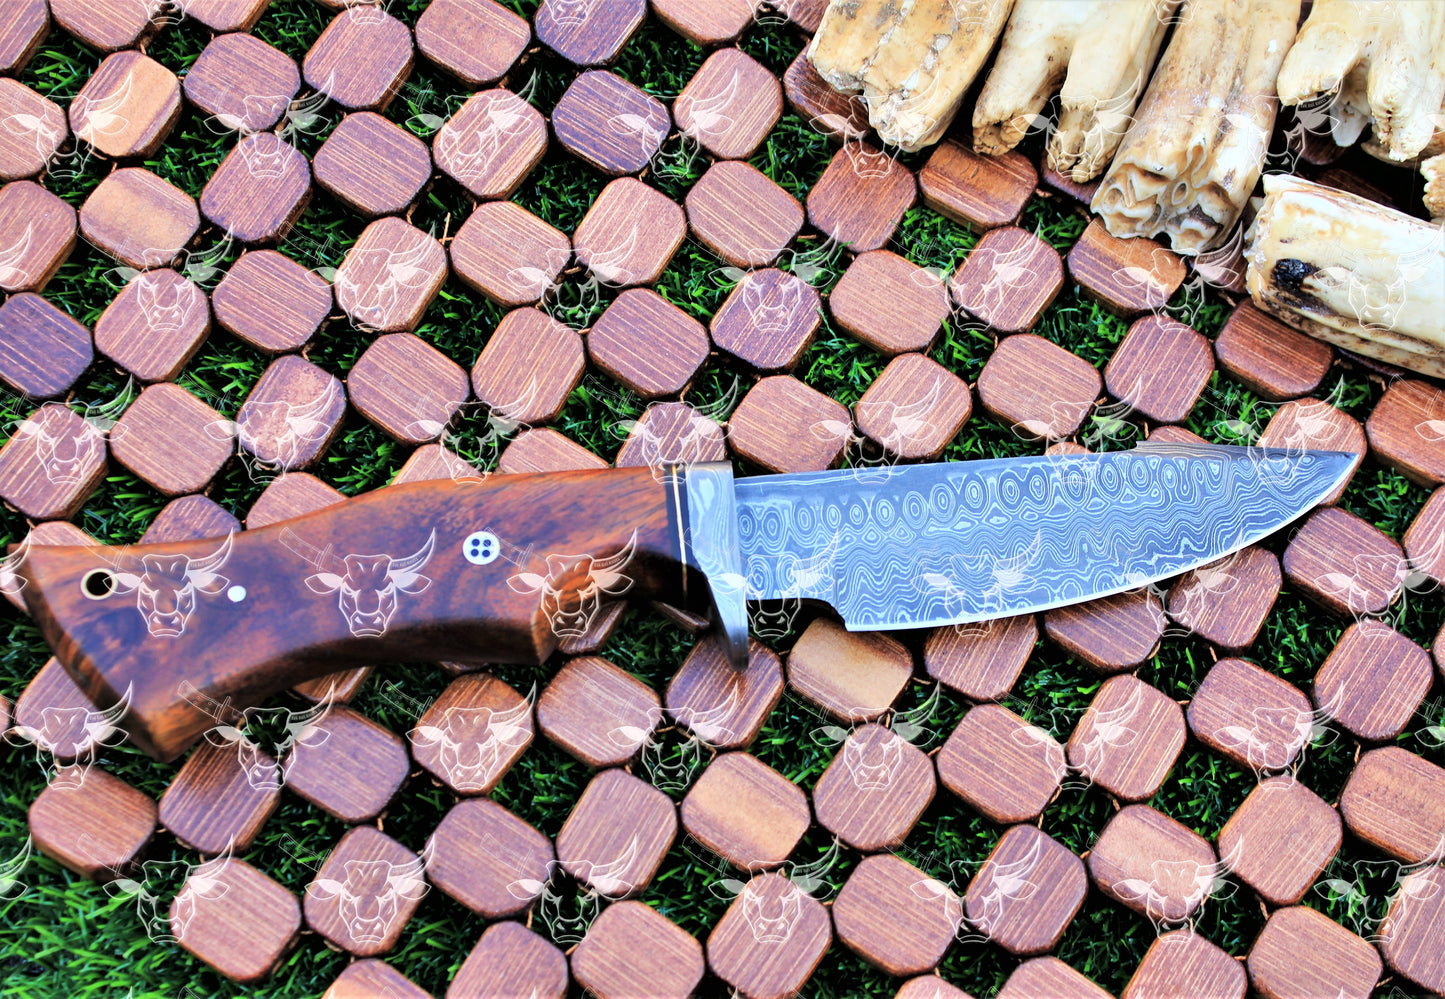 EBK-24 Premium Handmade Damscus steel Knife, Handforged Damascus Blade, Wood handle , LEather sheath with snake pattern